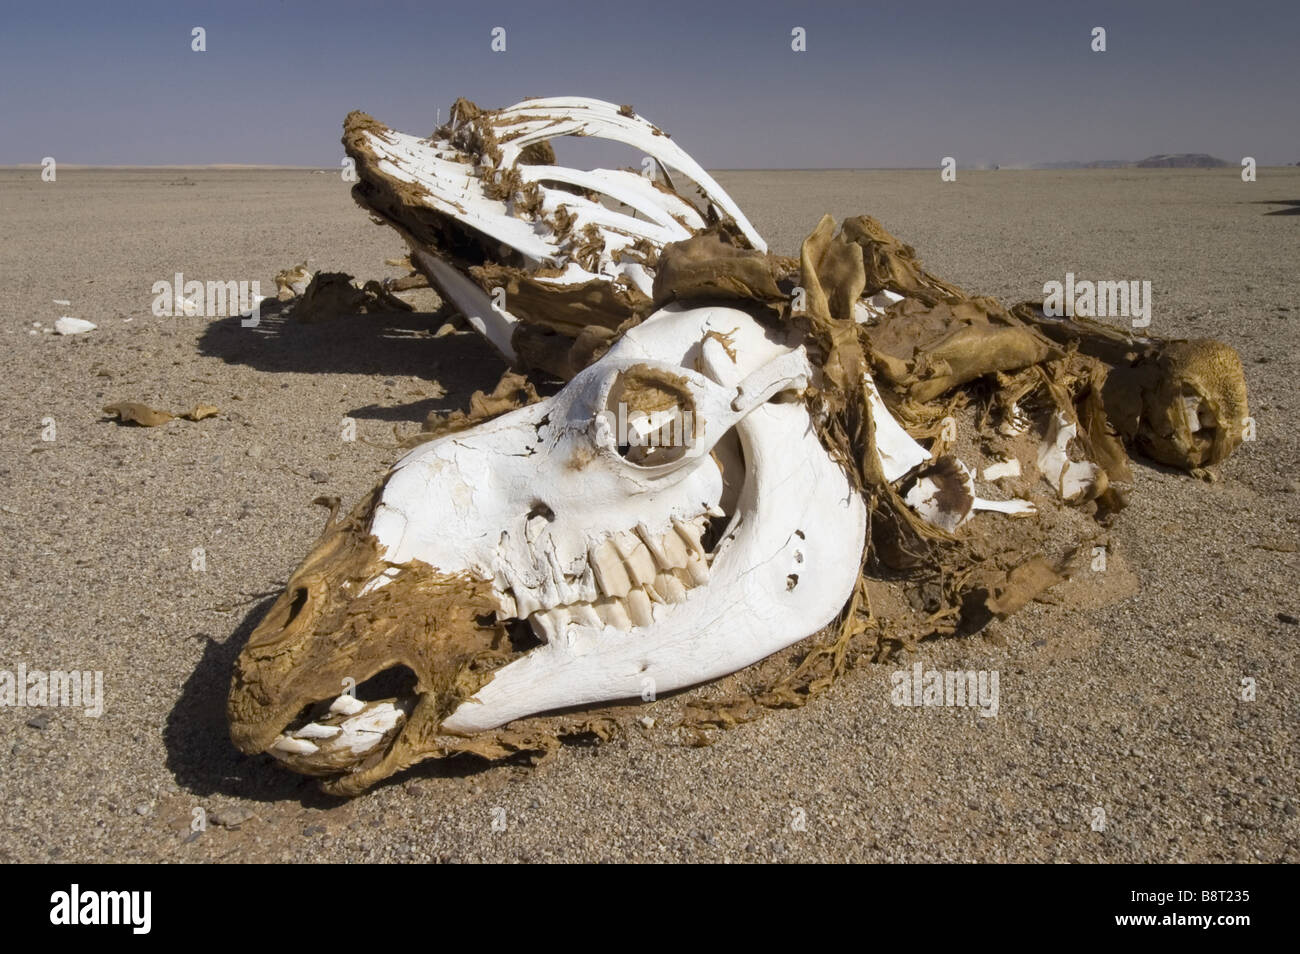 dead camel in the desert, Libya Stock Photo